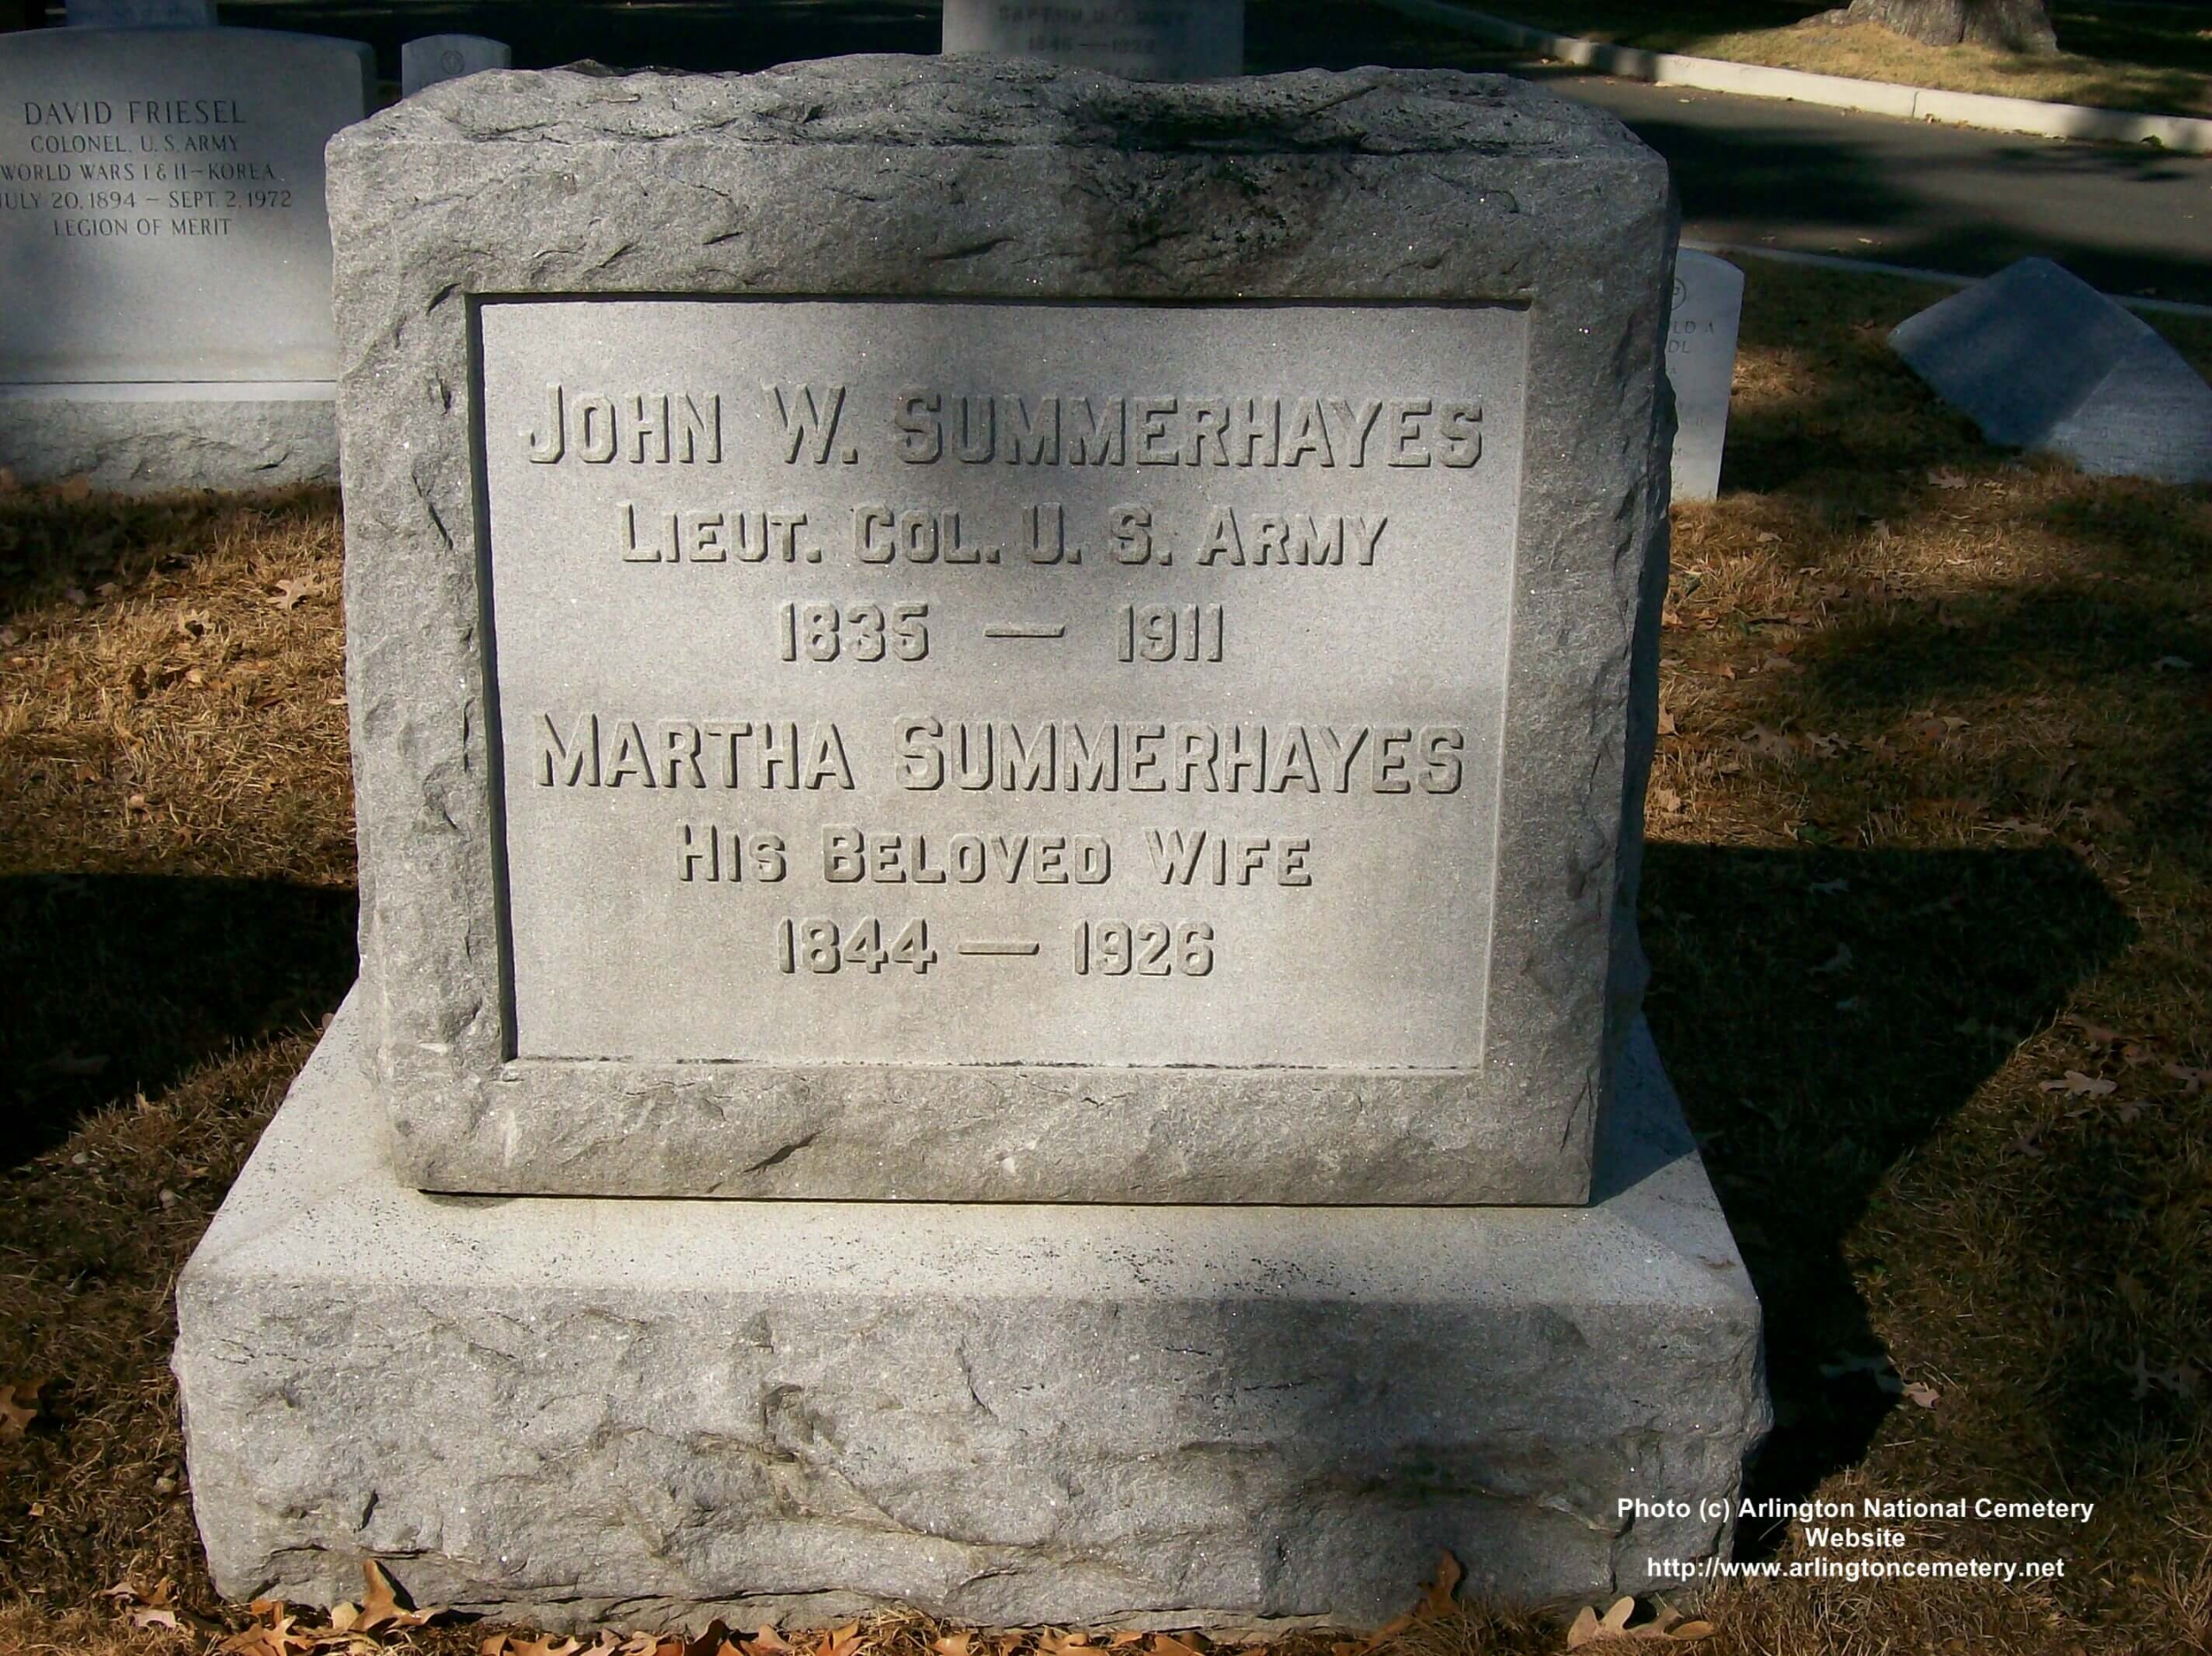 jwsummerhayes-gravesite-photo-october-2007-001